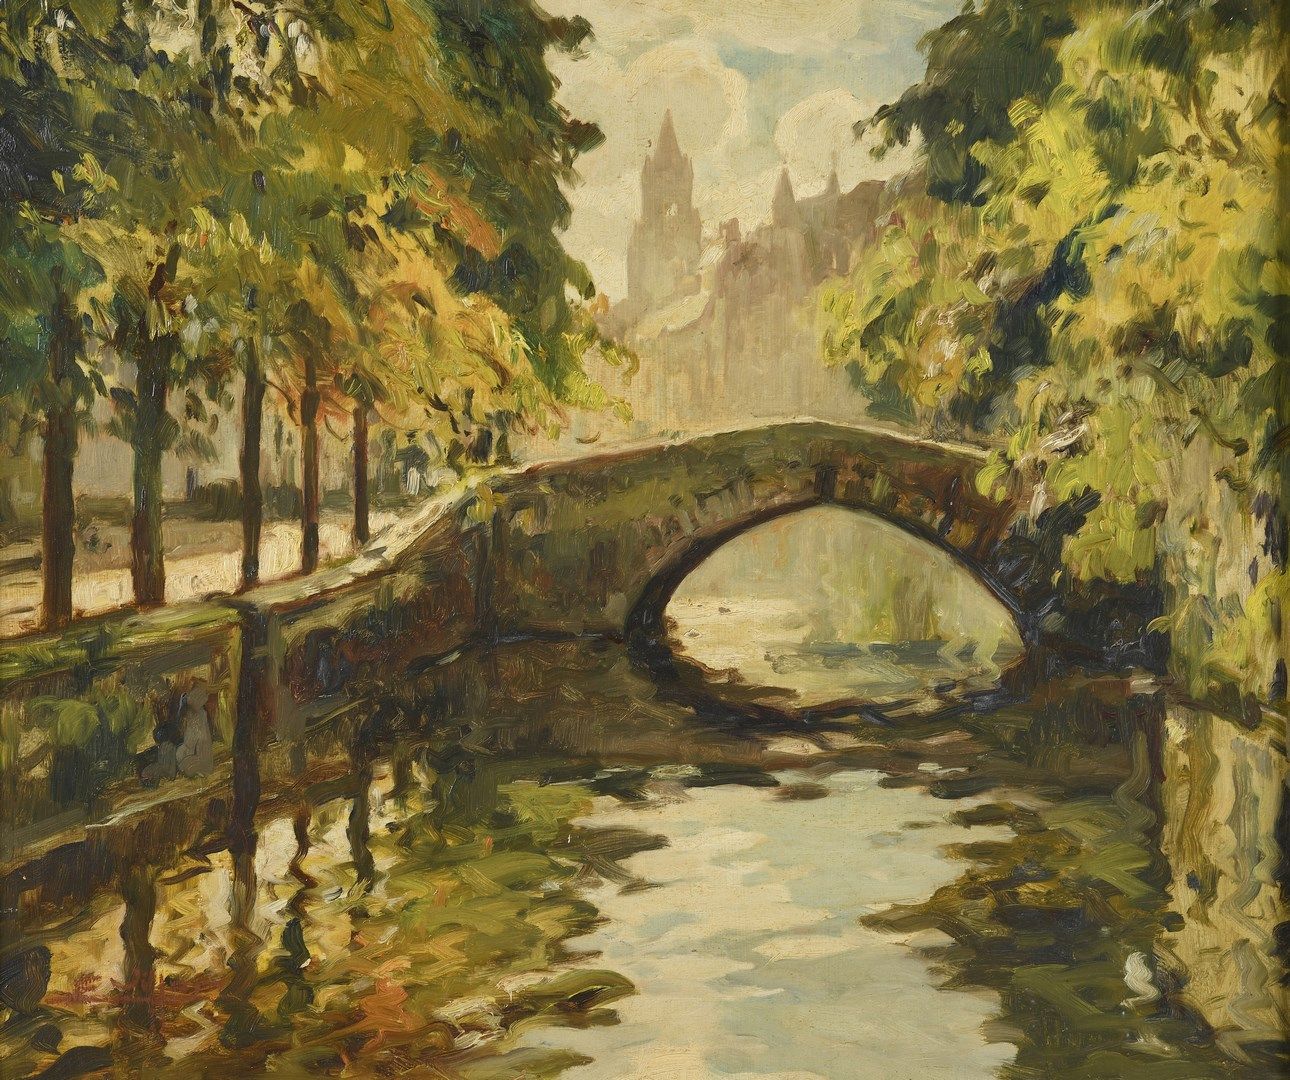 Null 维龙-欧仁，1879-1951年

布鲁日，运河

板上油彩

左下角有签名，位于背面

46 x 58 厘米